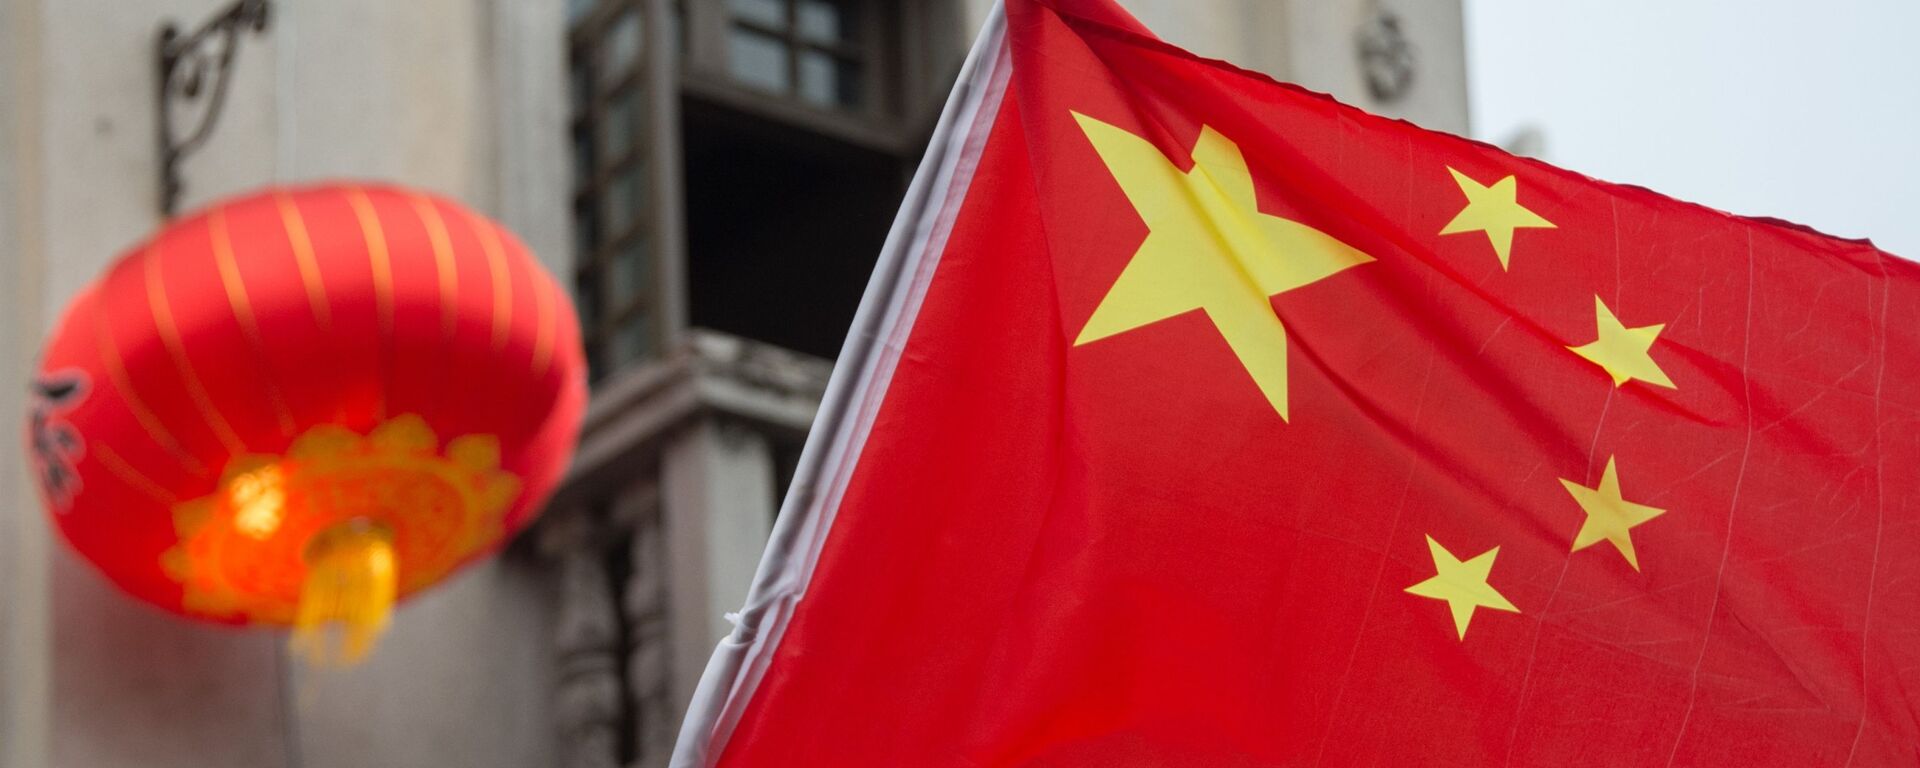 La bandera de China - Sputnik Mundo, 1920, 24.12.2021